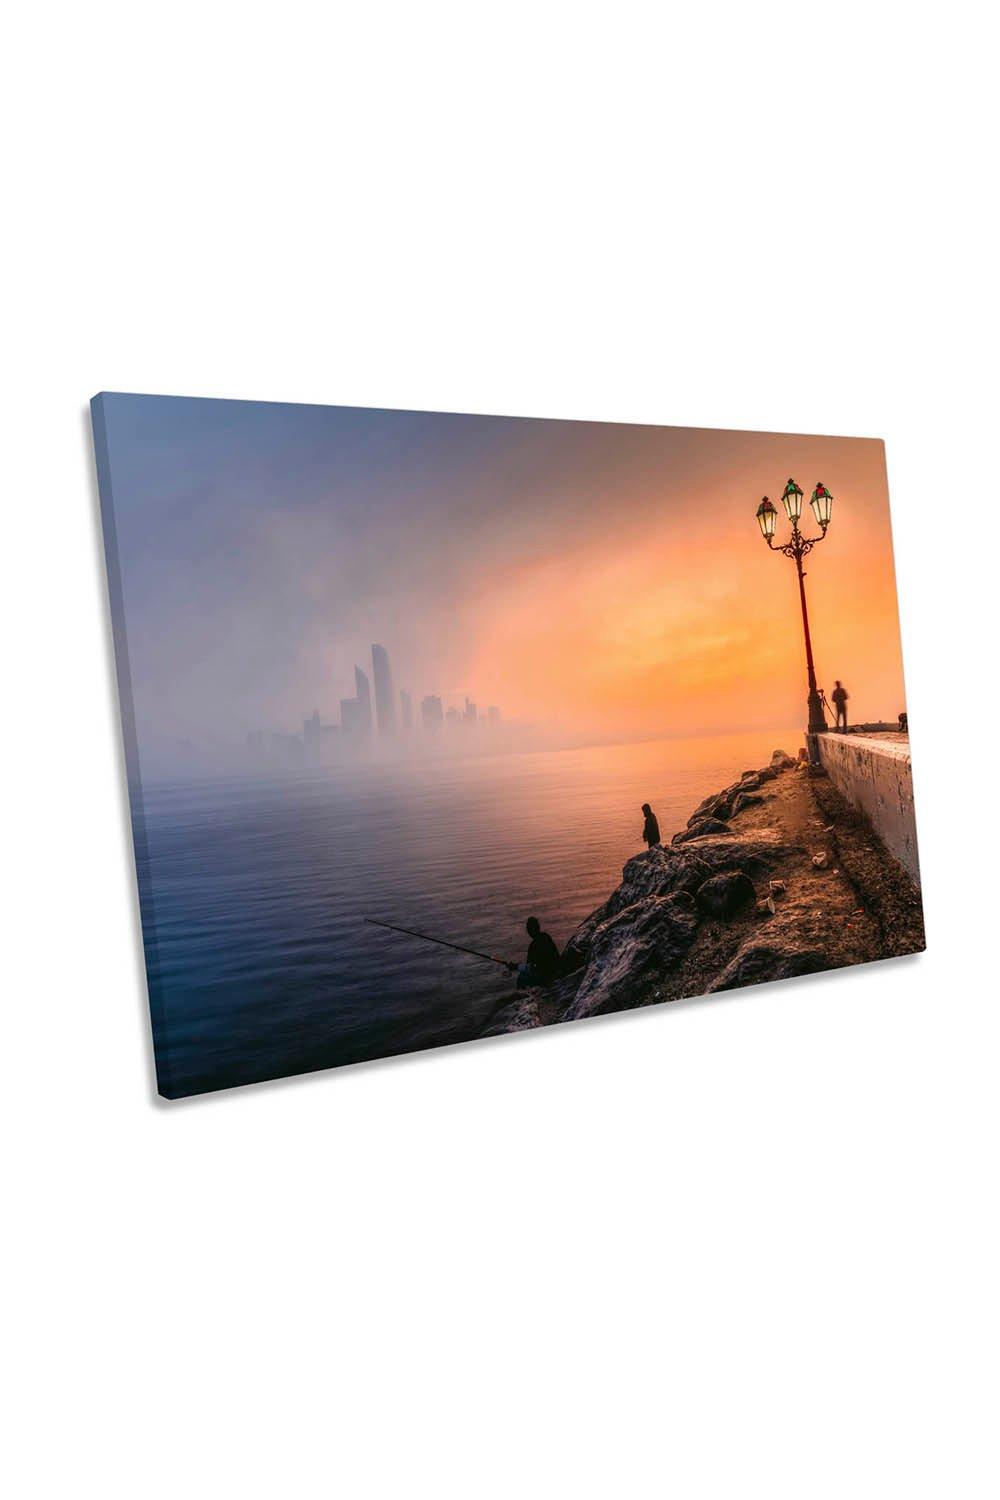 Abu Dhabi City Skyline Foggy Sunset Canvas Wall Art Picture Print